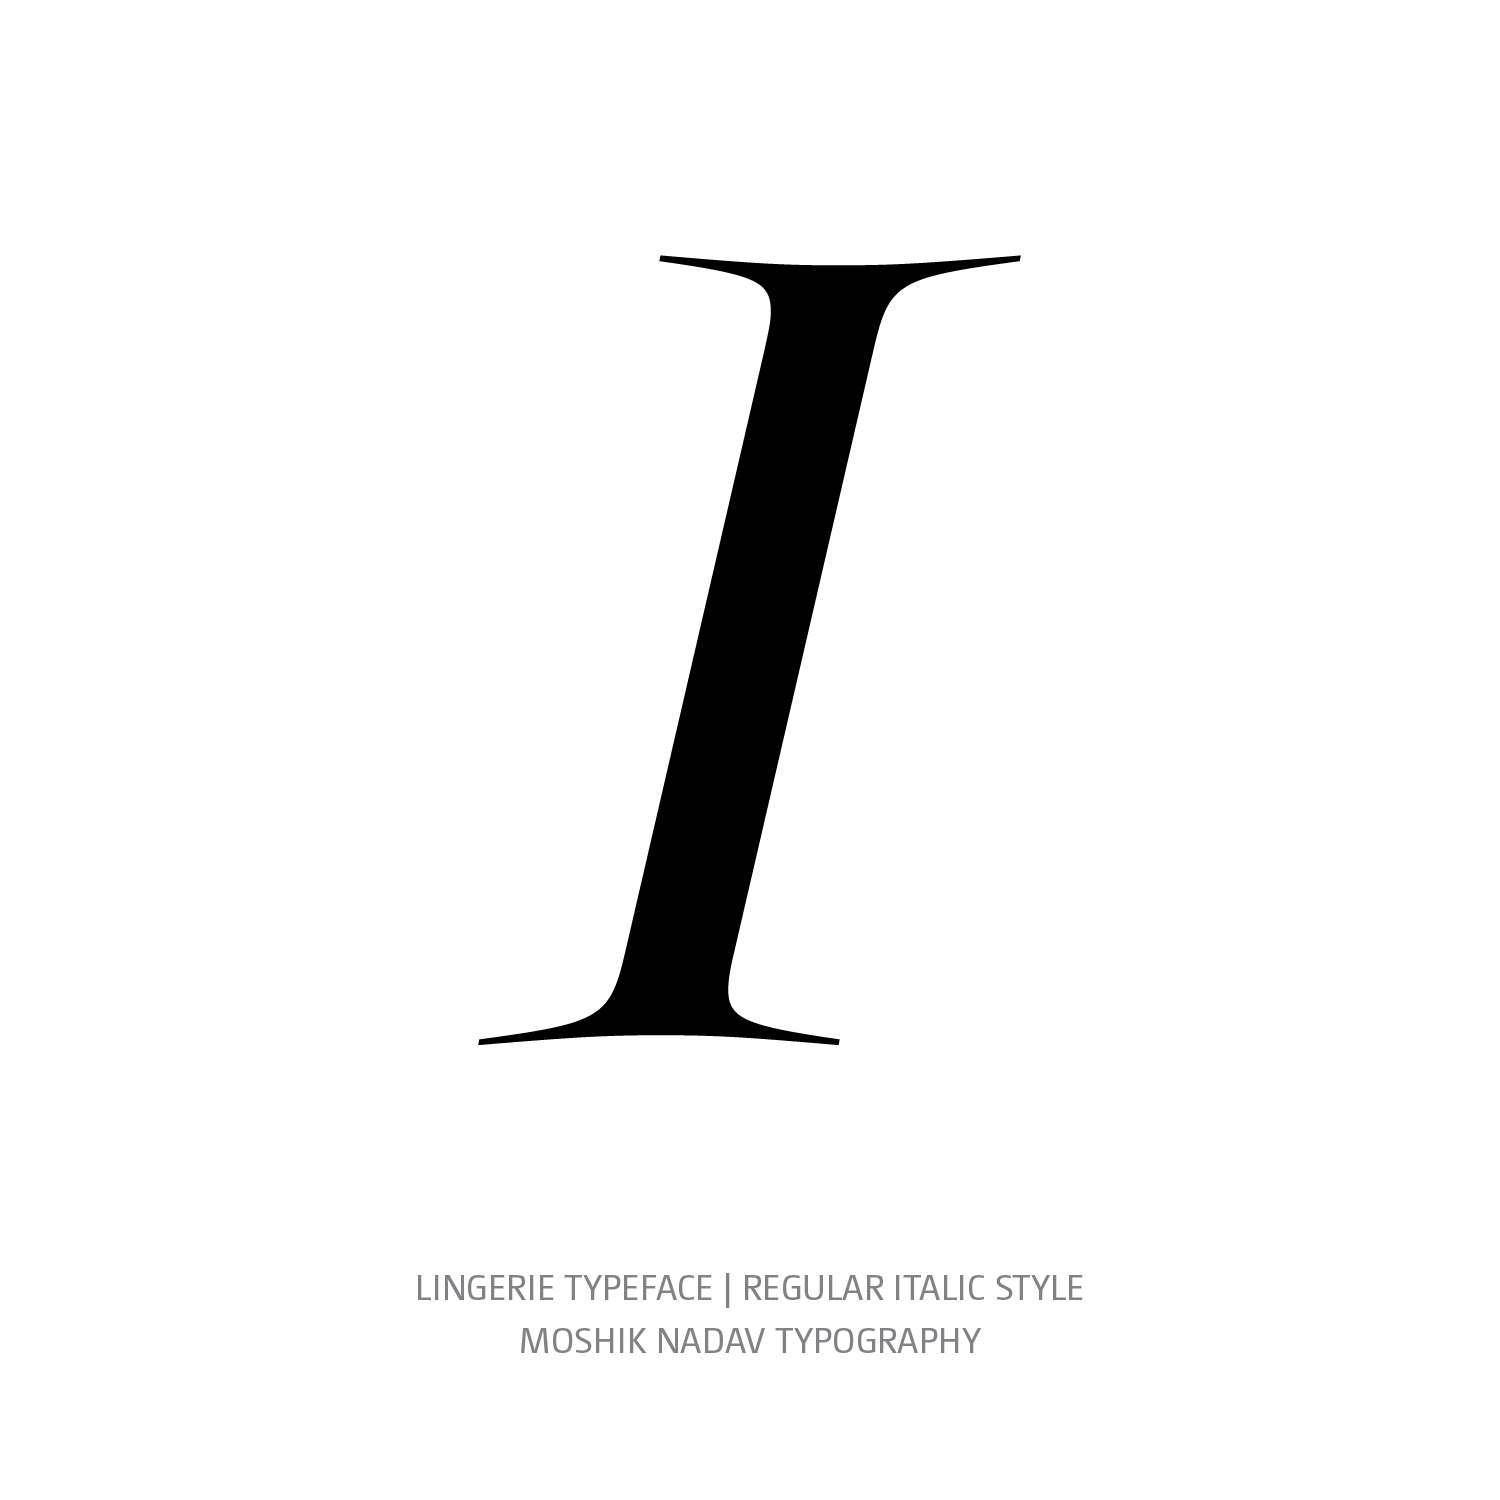 Lingerie Typeface Regular Italic I- Fashion fonts by Moshik Nadav Typography